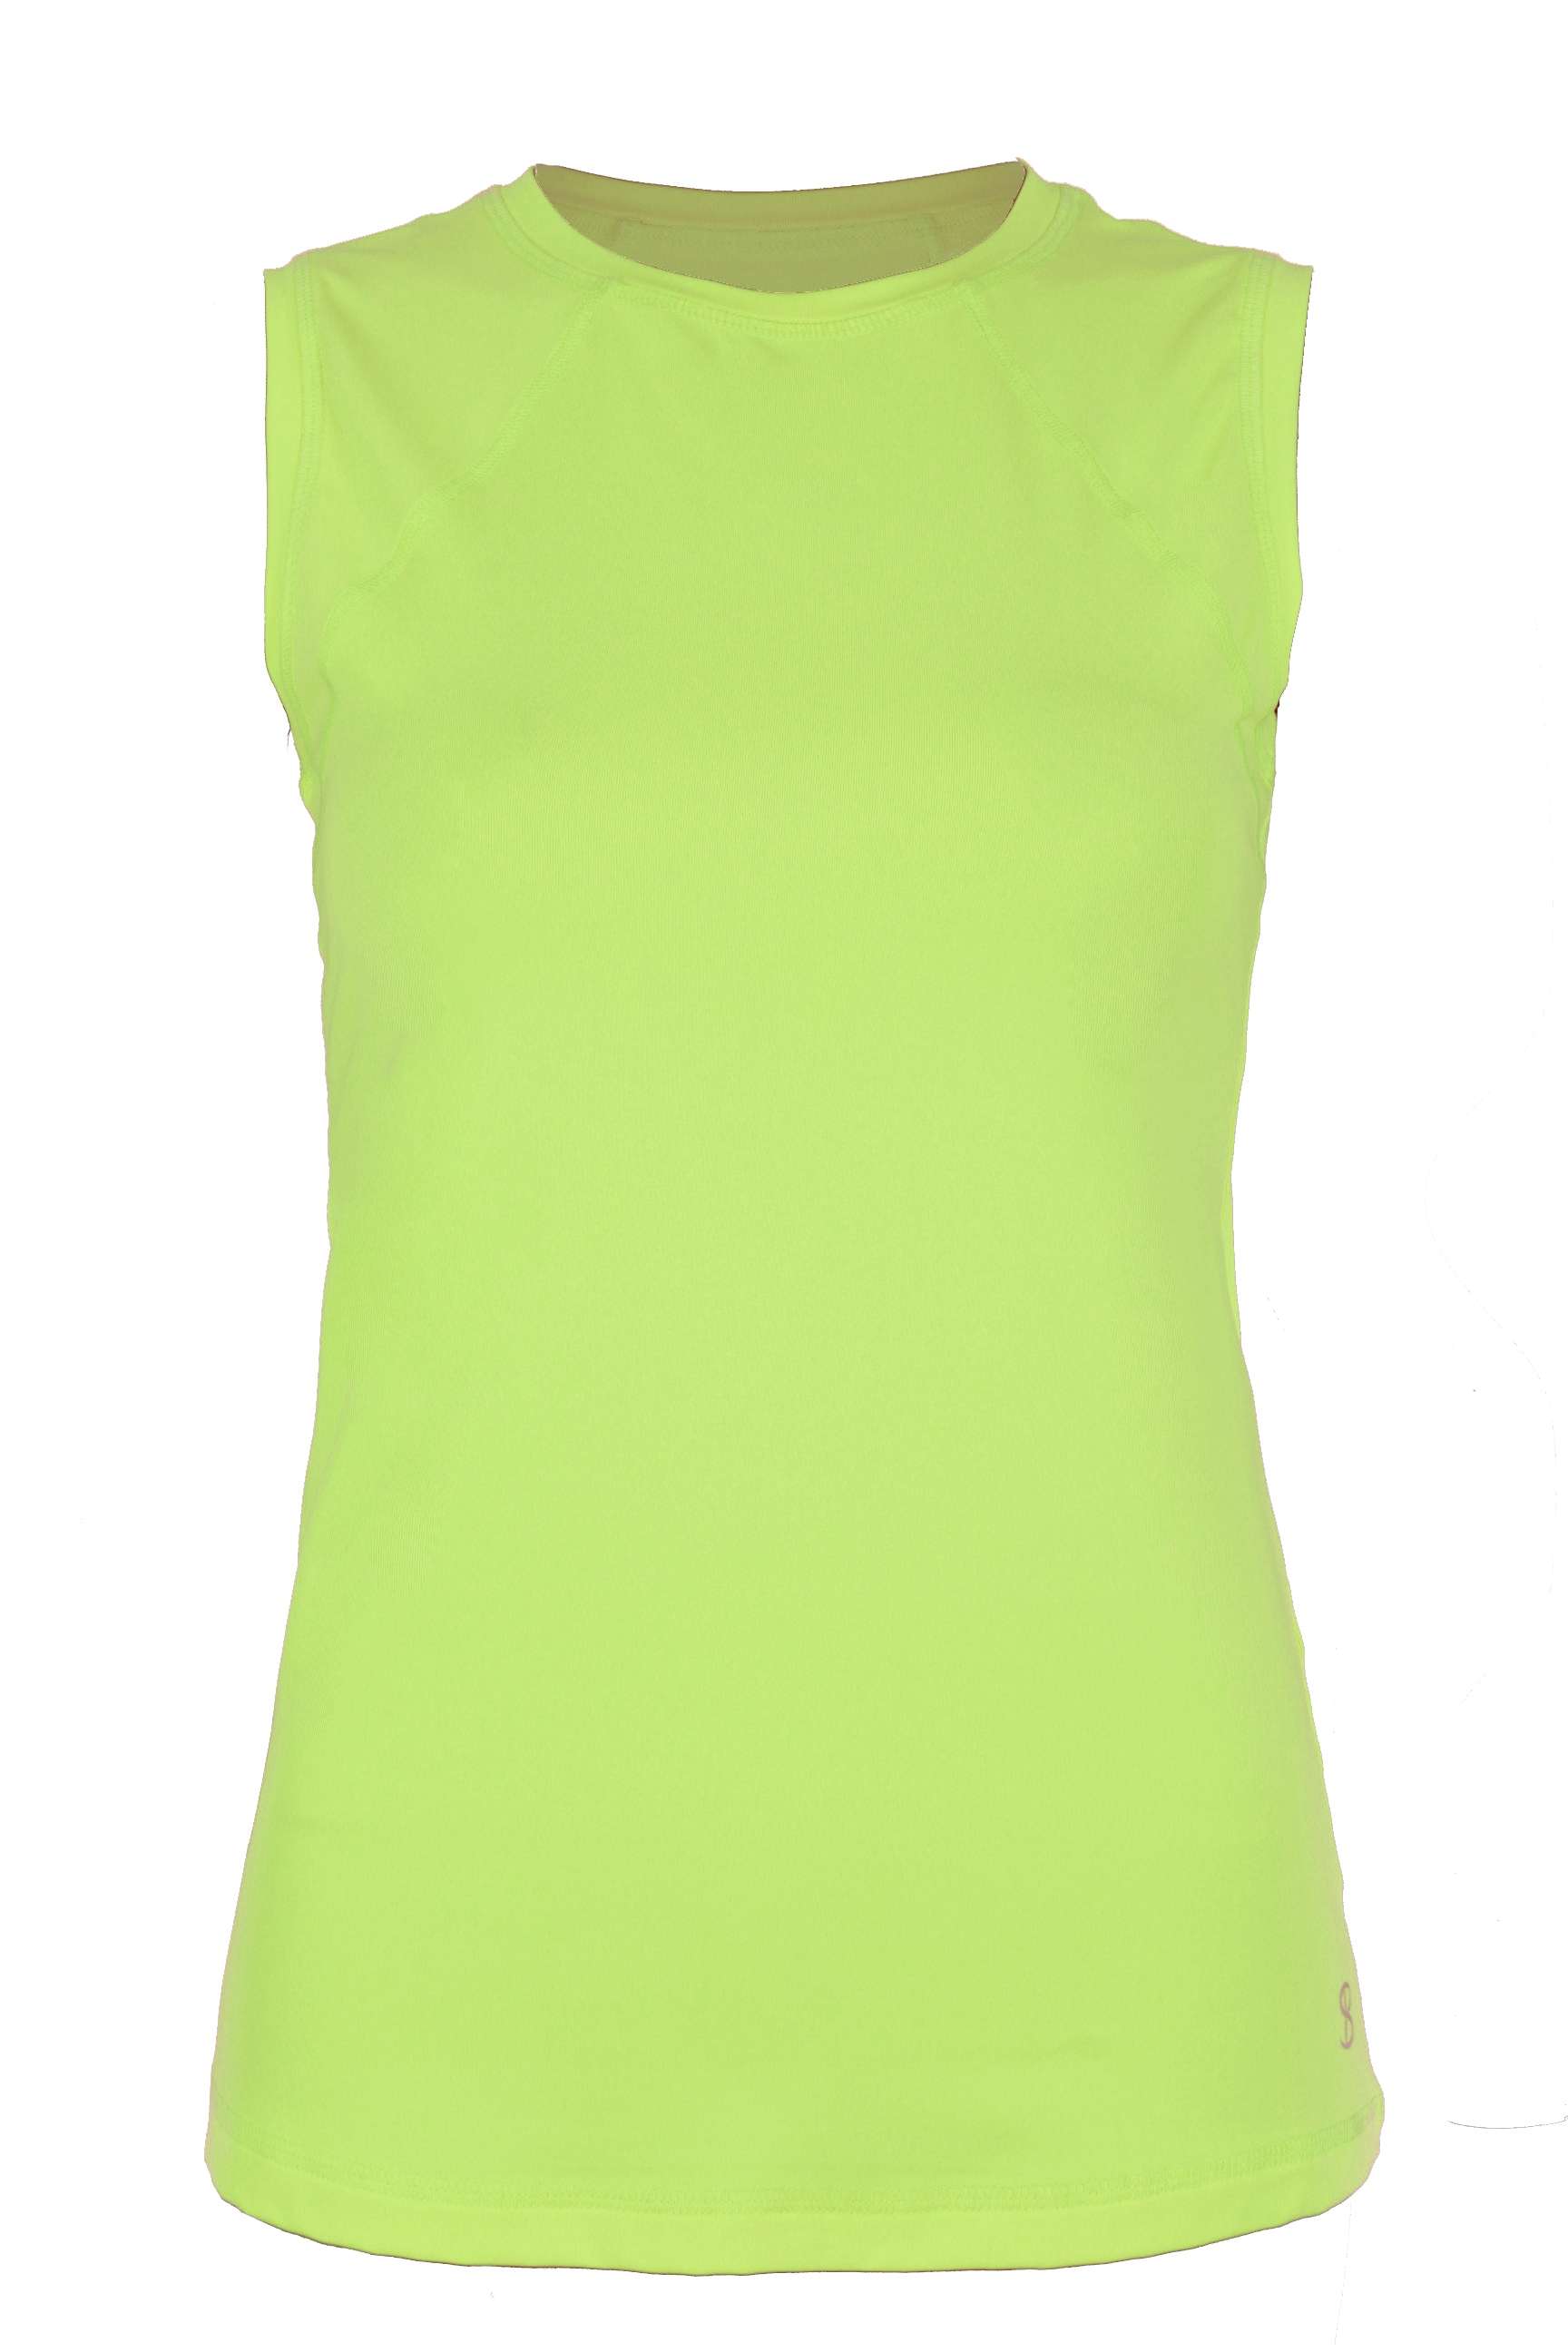 Sofibella Women&amp;apos;s Classic Sleeveless Tennis Top (Electric Yellow)